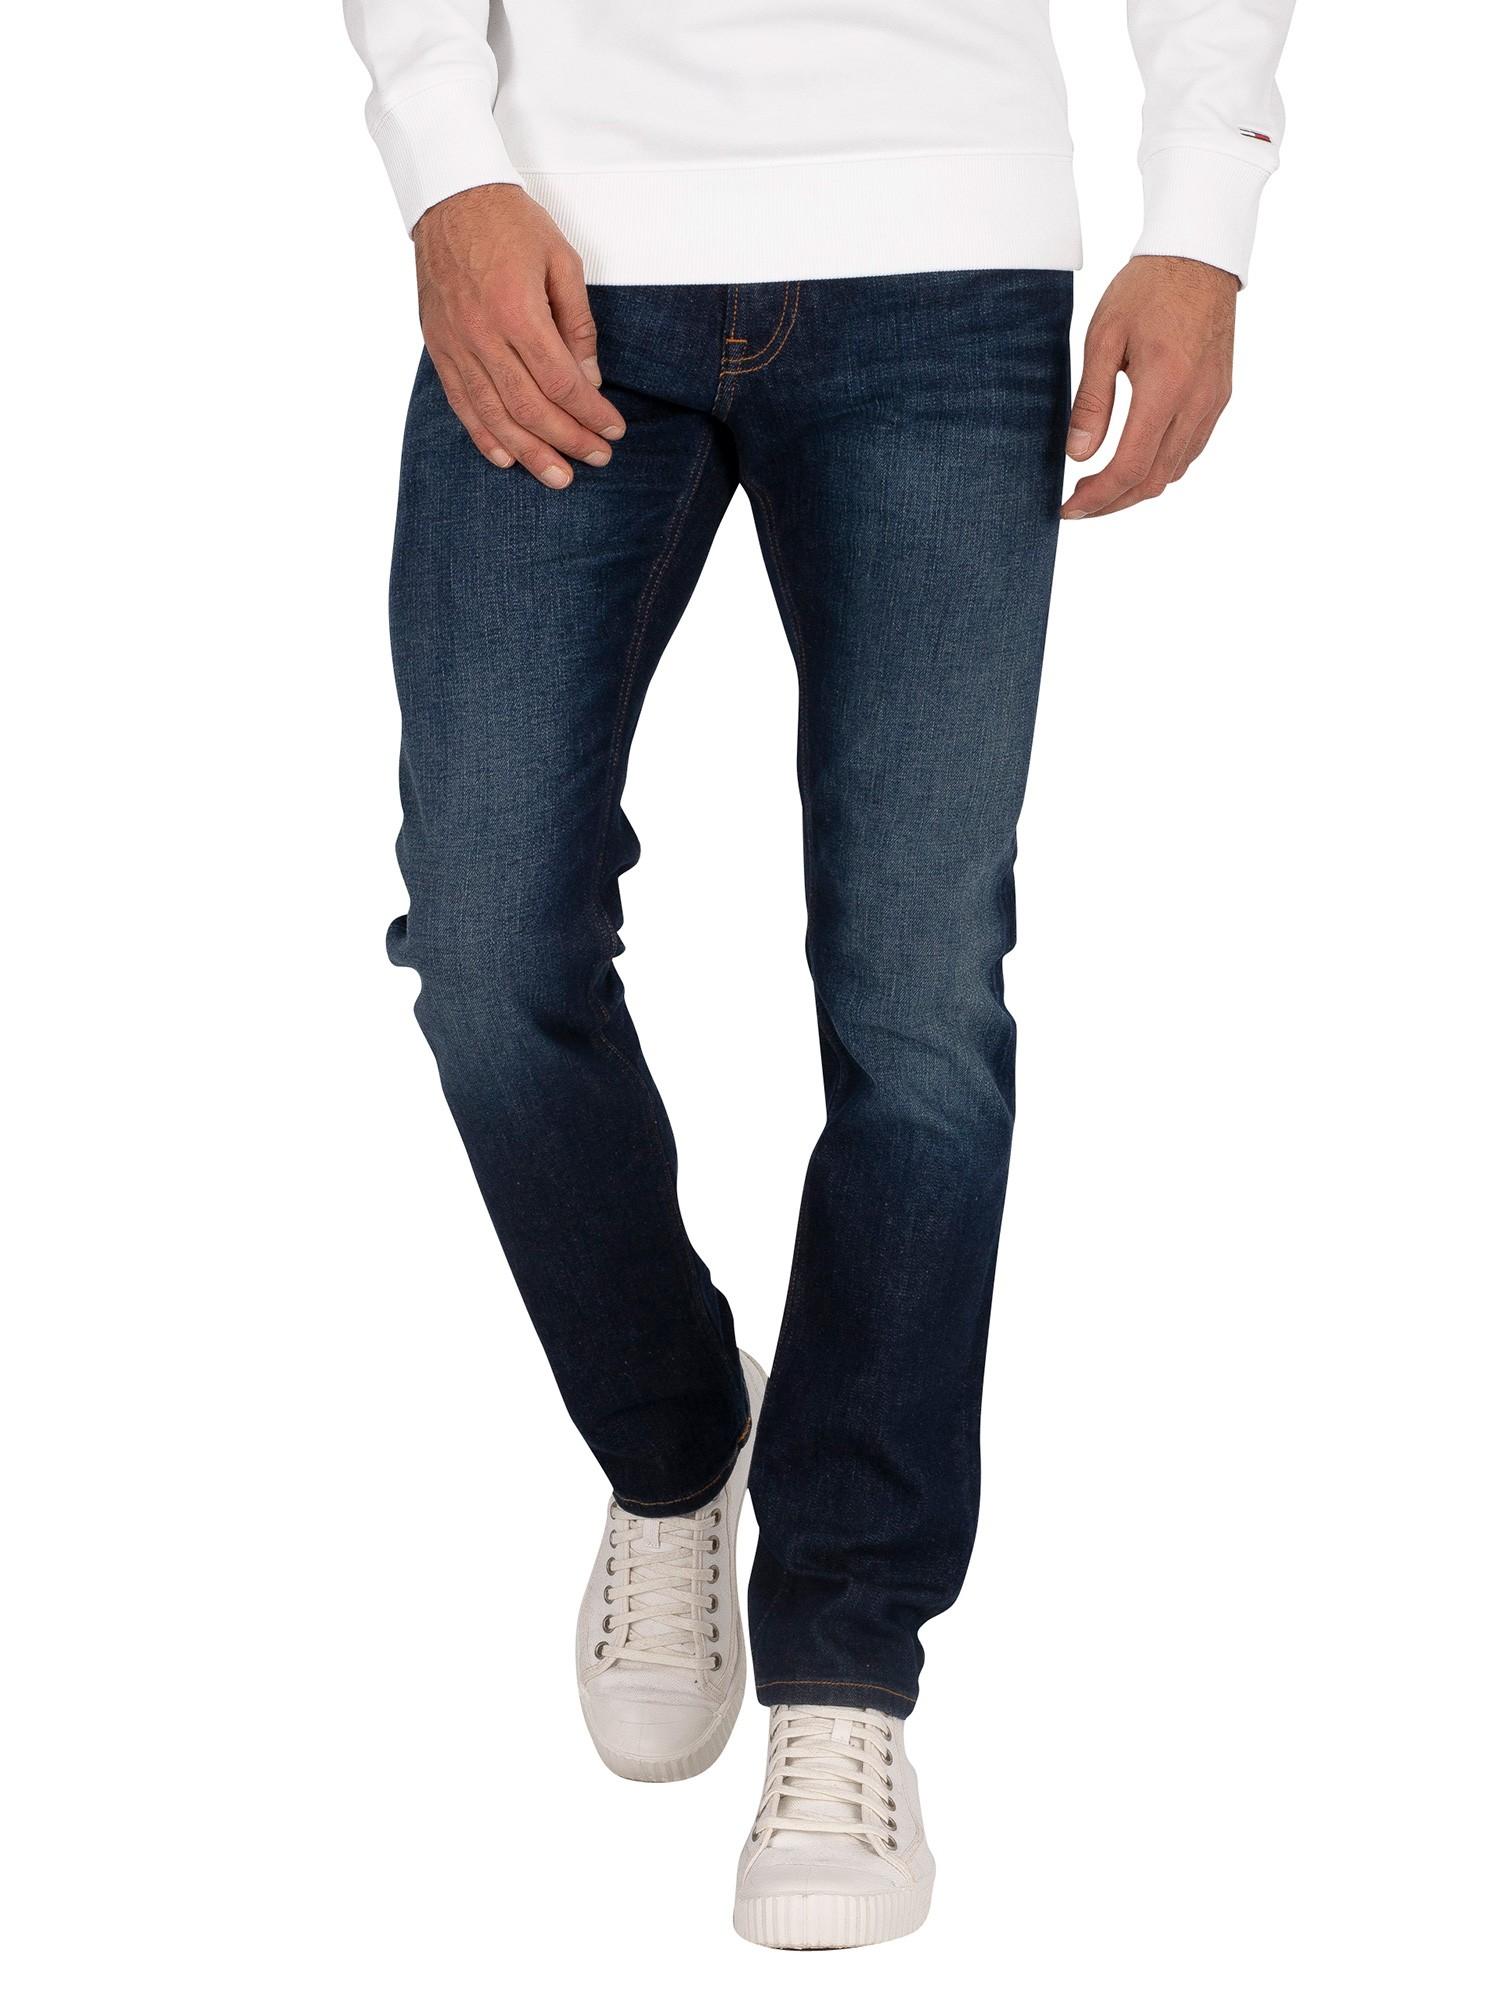 Tommy Hilfiger Denim Slim Scanton Daco Jeans in Blue for Men - Lyst